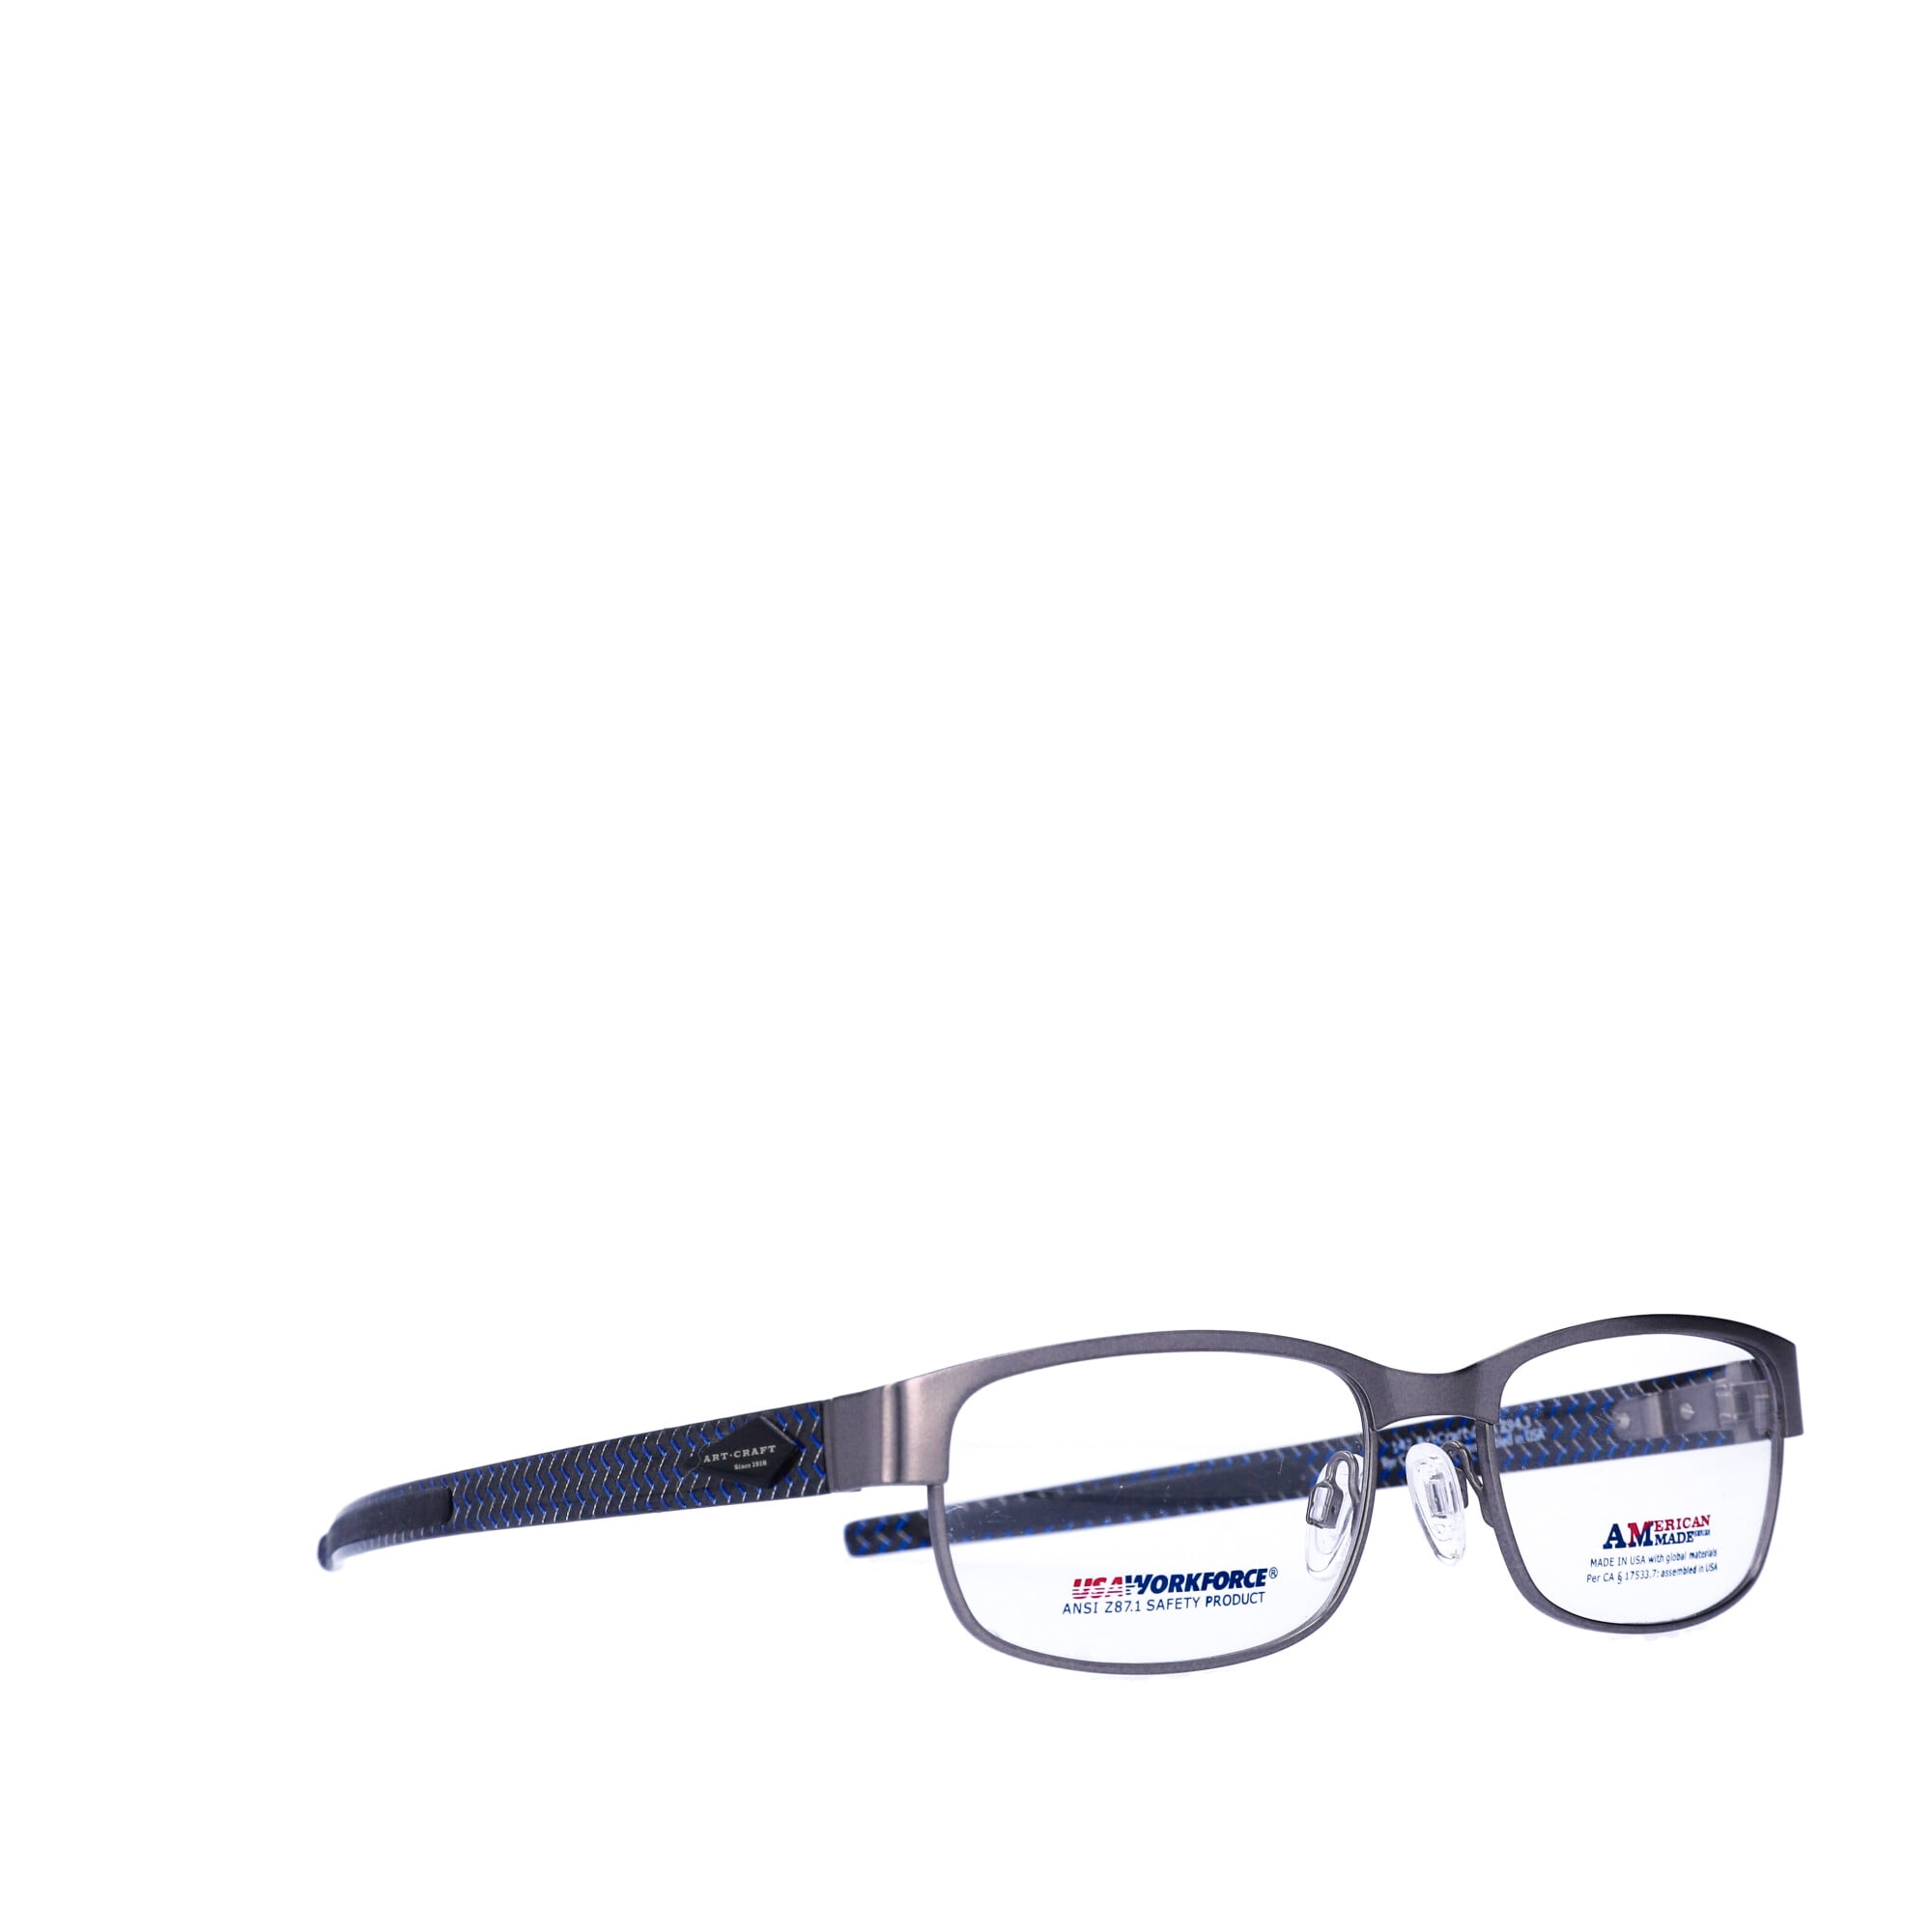 Art-Craft Optical Inc.US Workforce Safety Glasses 441 AM Pewter/Blue